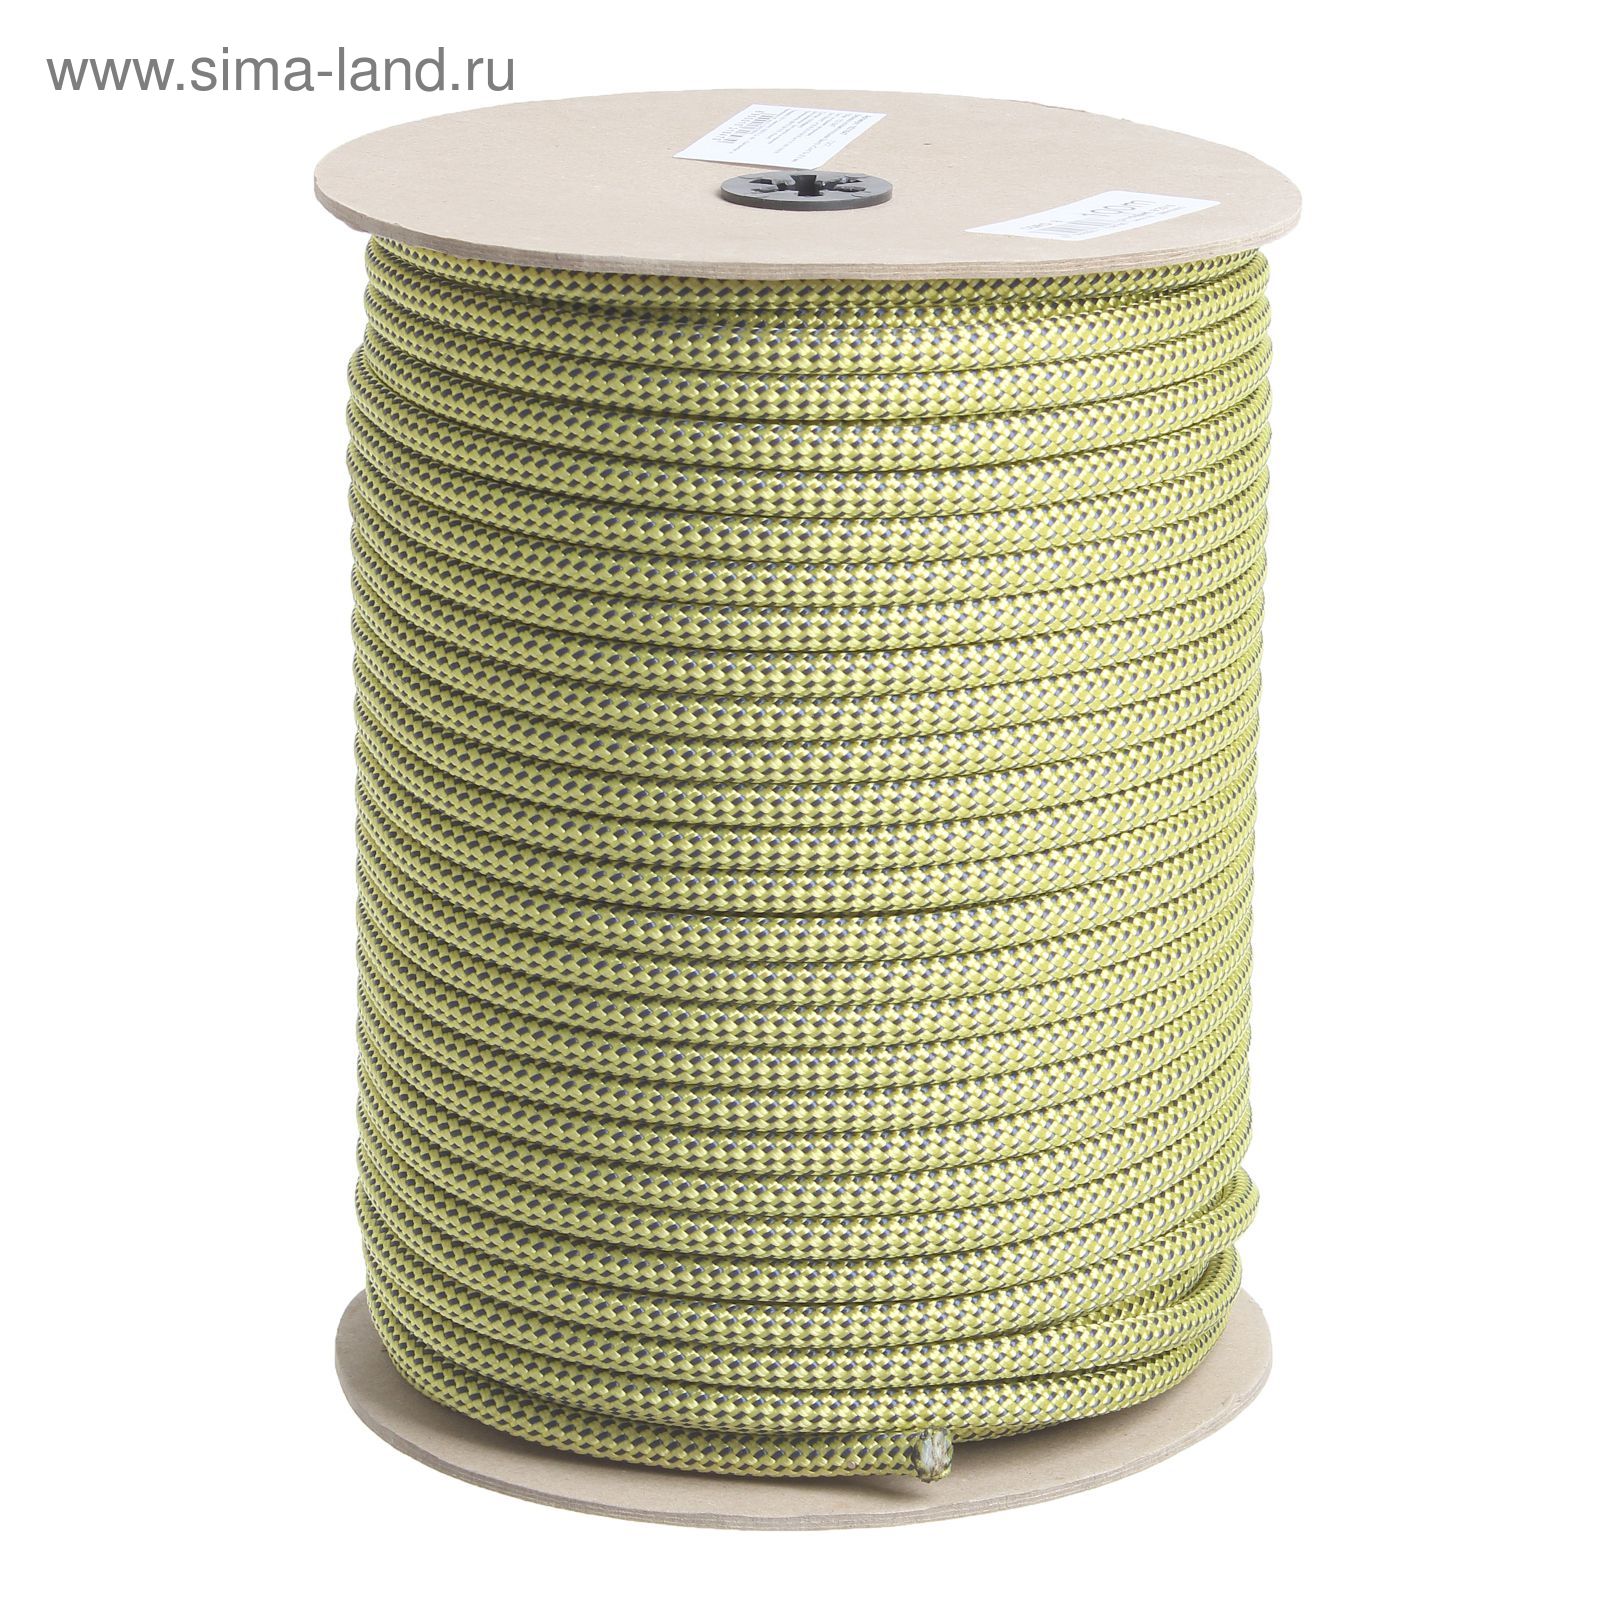 Веревка вспомогательная Венто «Cord 8», диаметр 8 мм (100 м), цвет МИКС